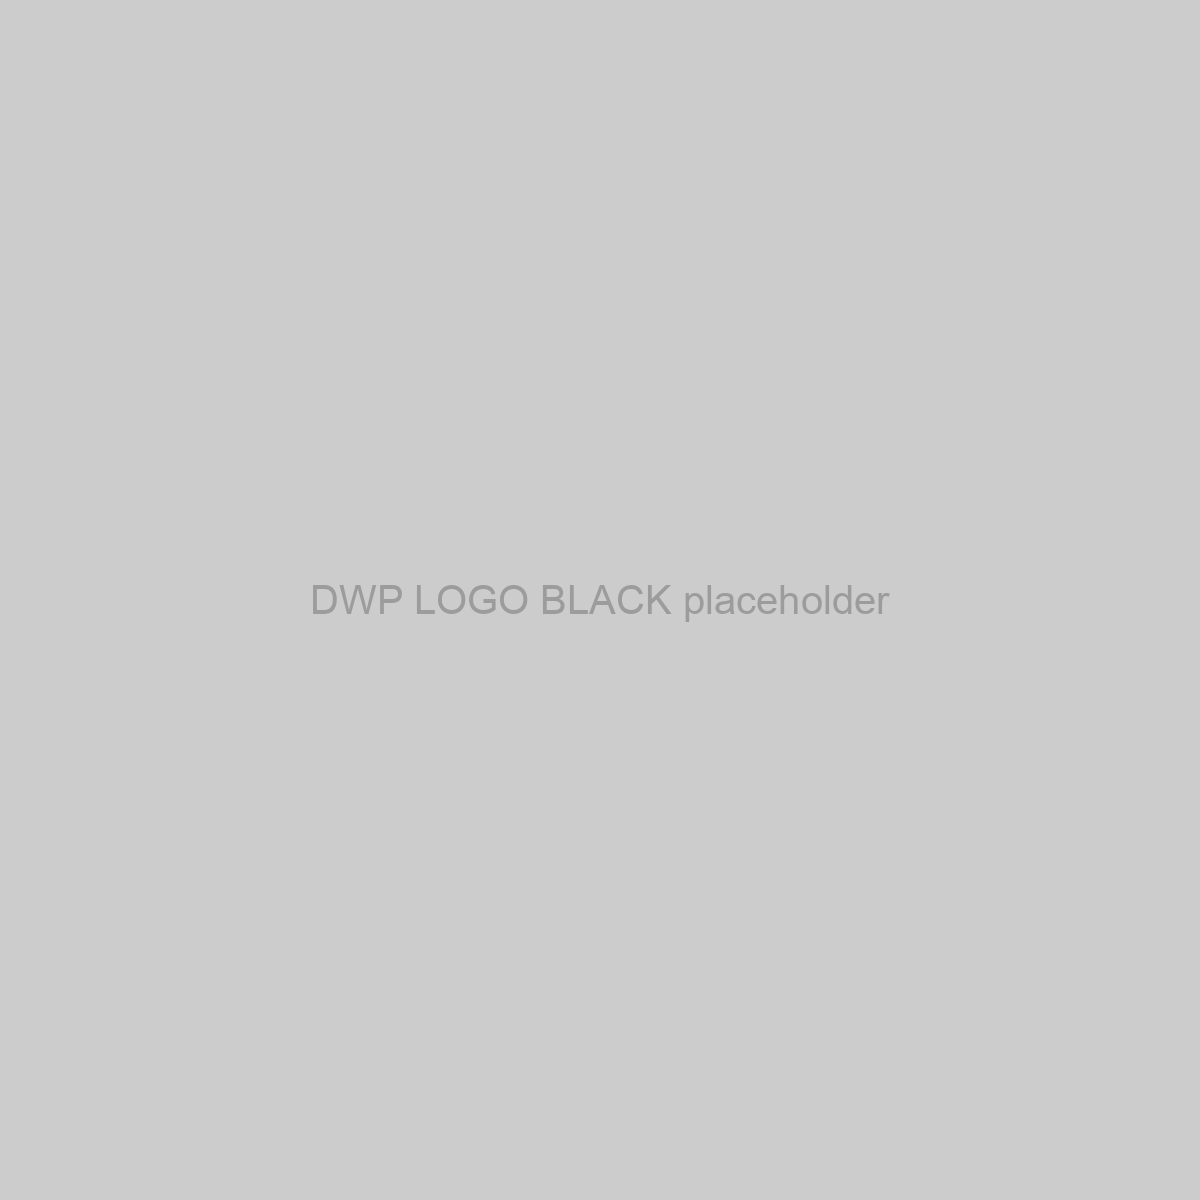 DWP LOGO BLACK Placeholder Image